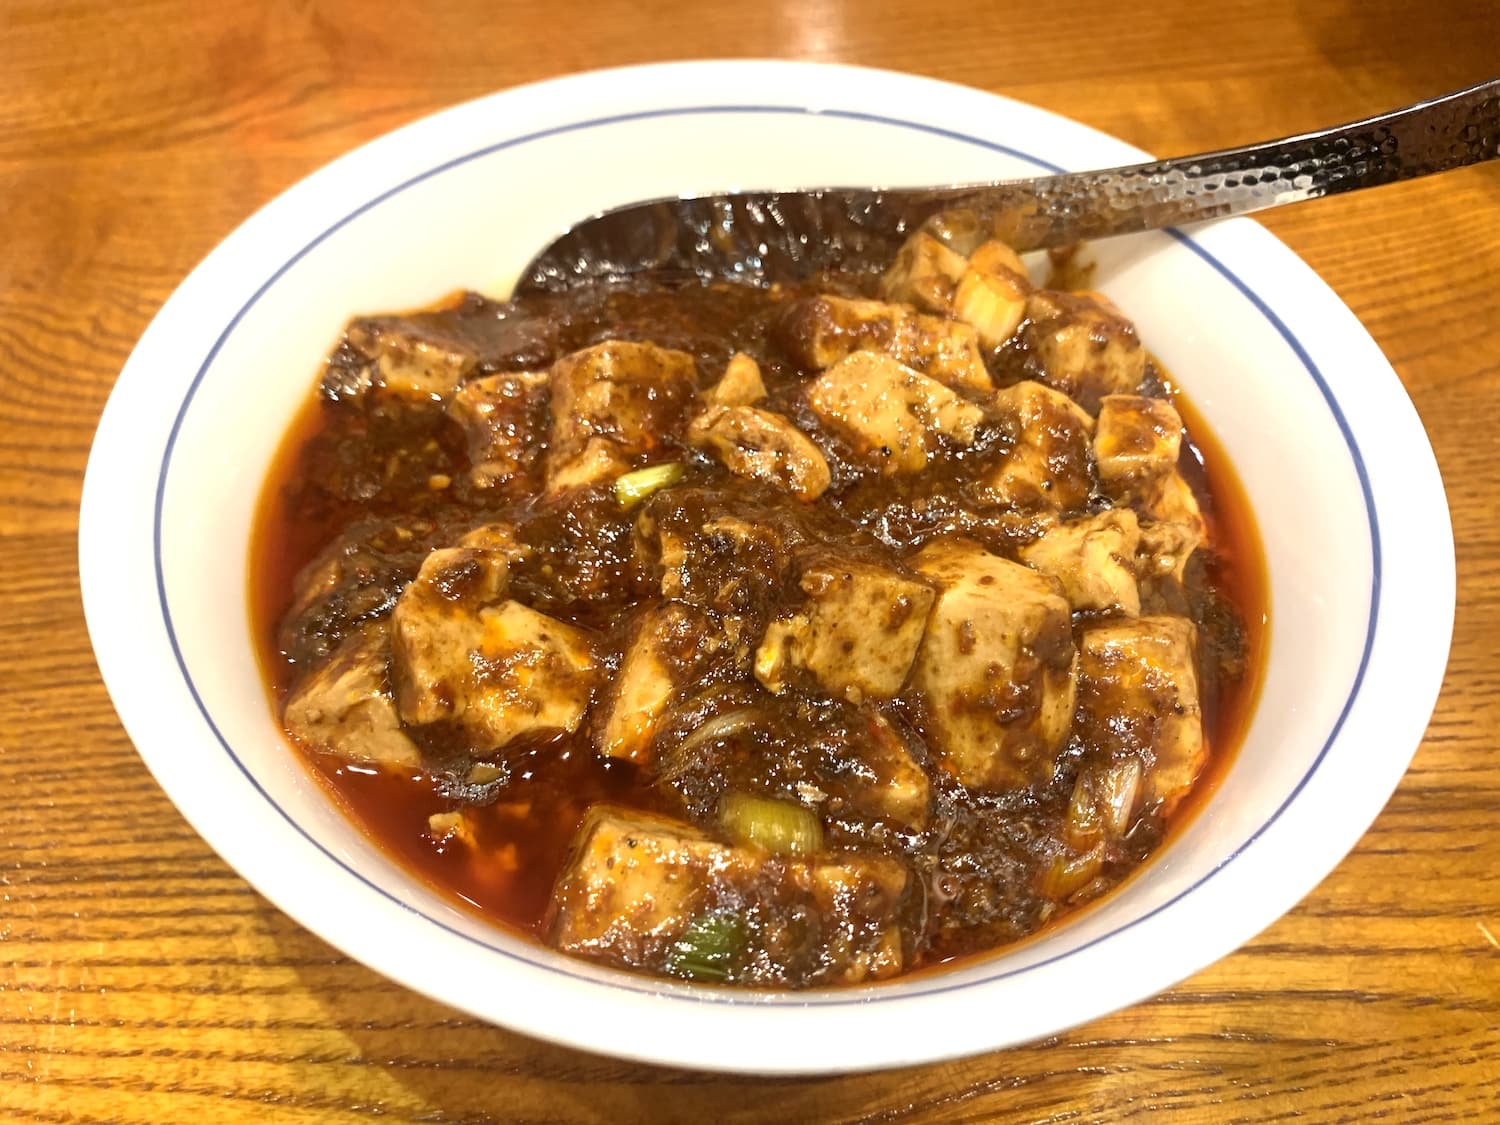 Chen Mapo Tofu (陳麻婆豆腐 麻婆豆腐発祥の店): From Chengdu to Japan and Beyond